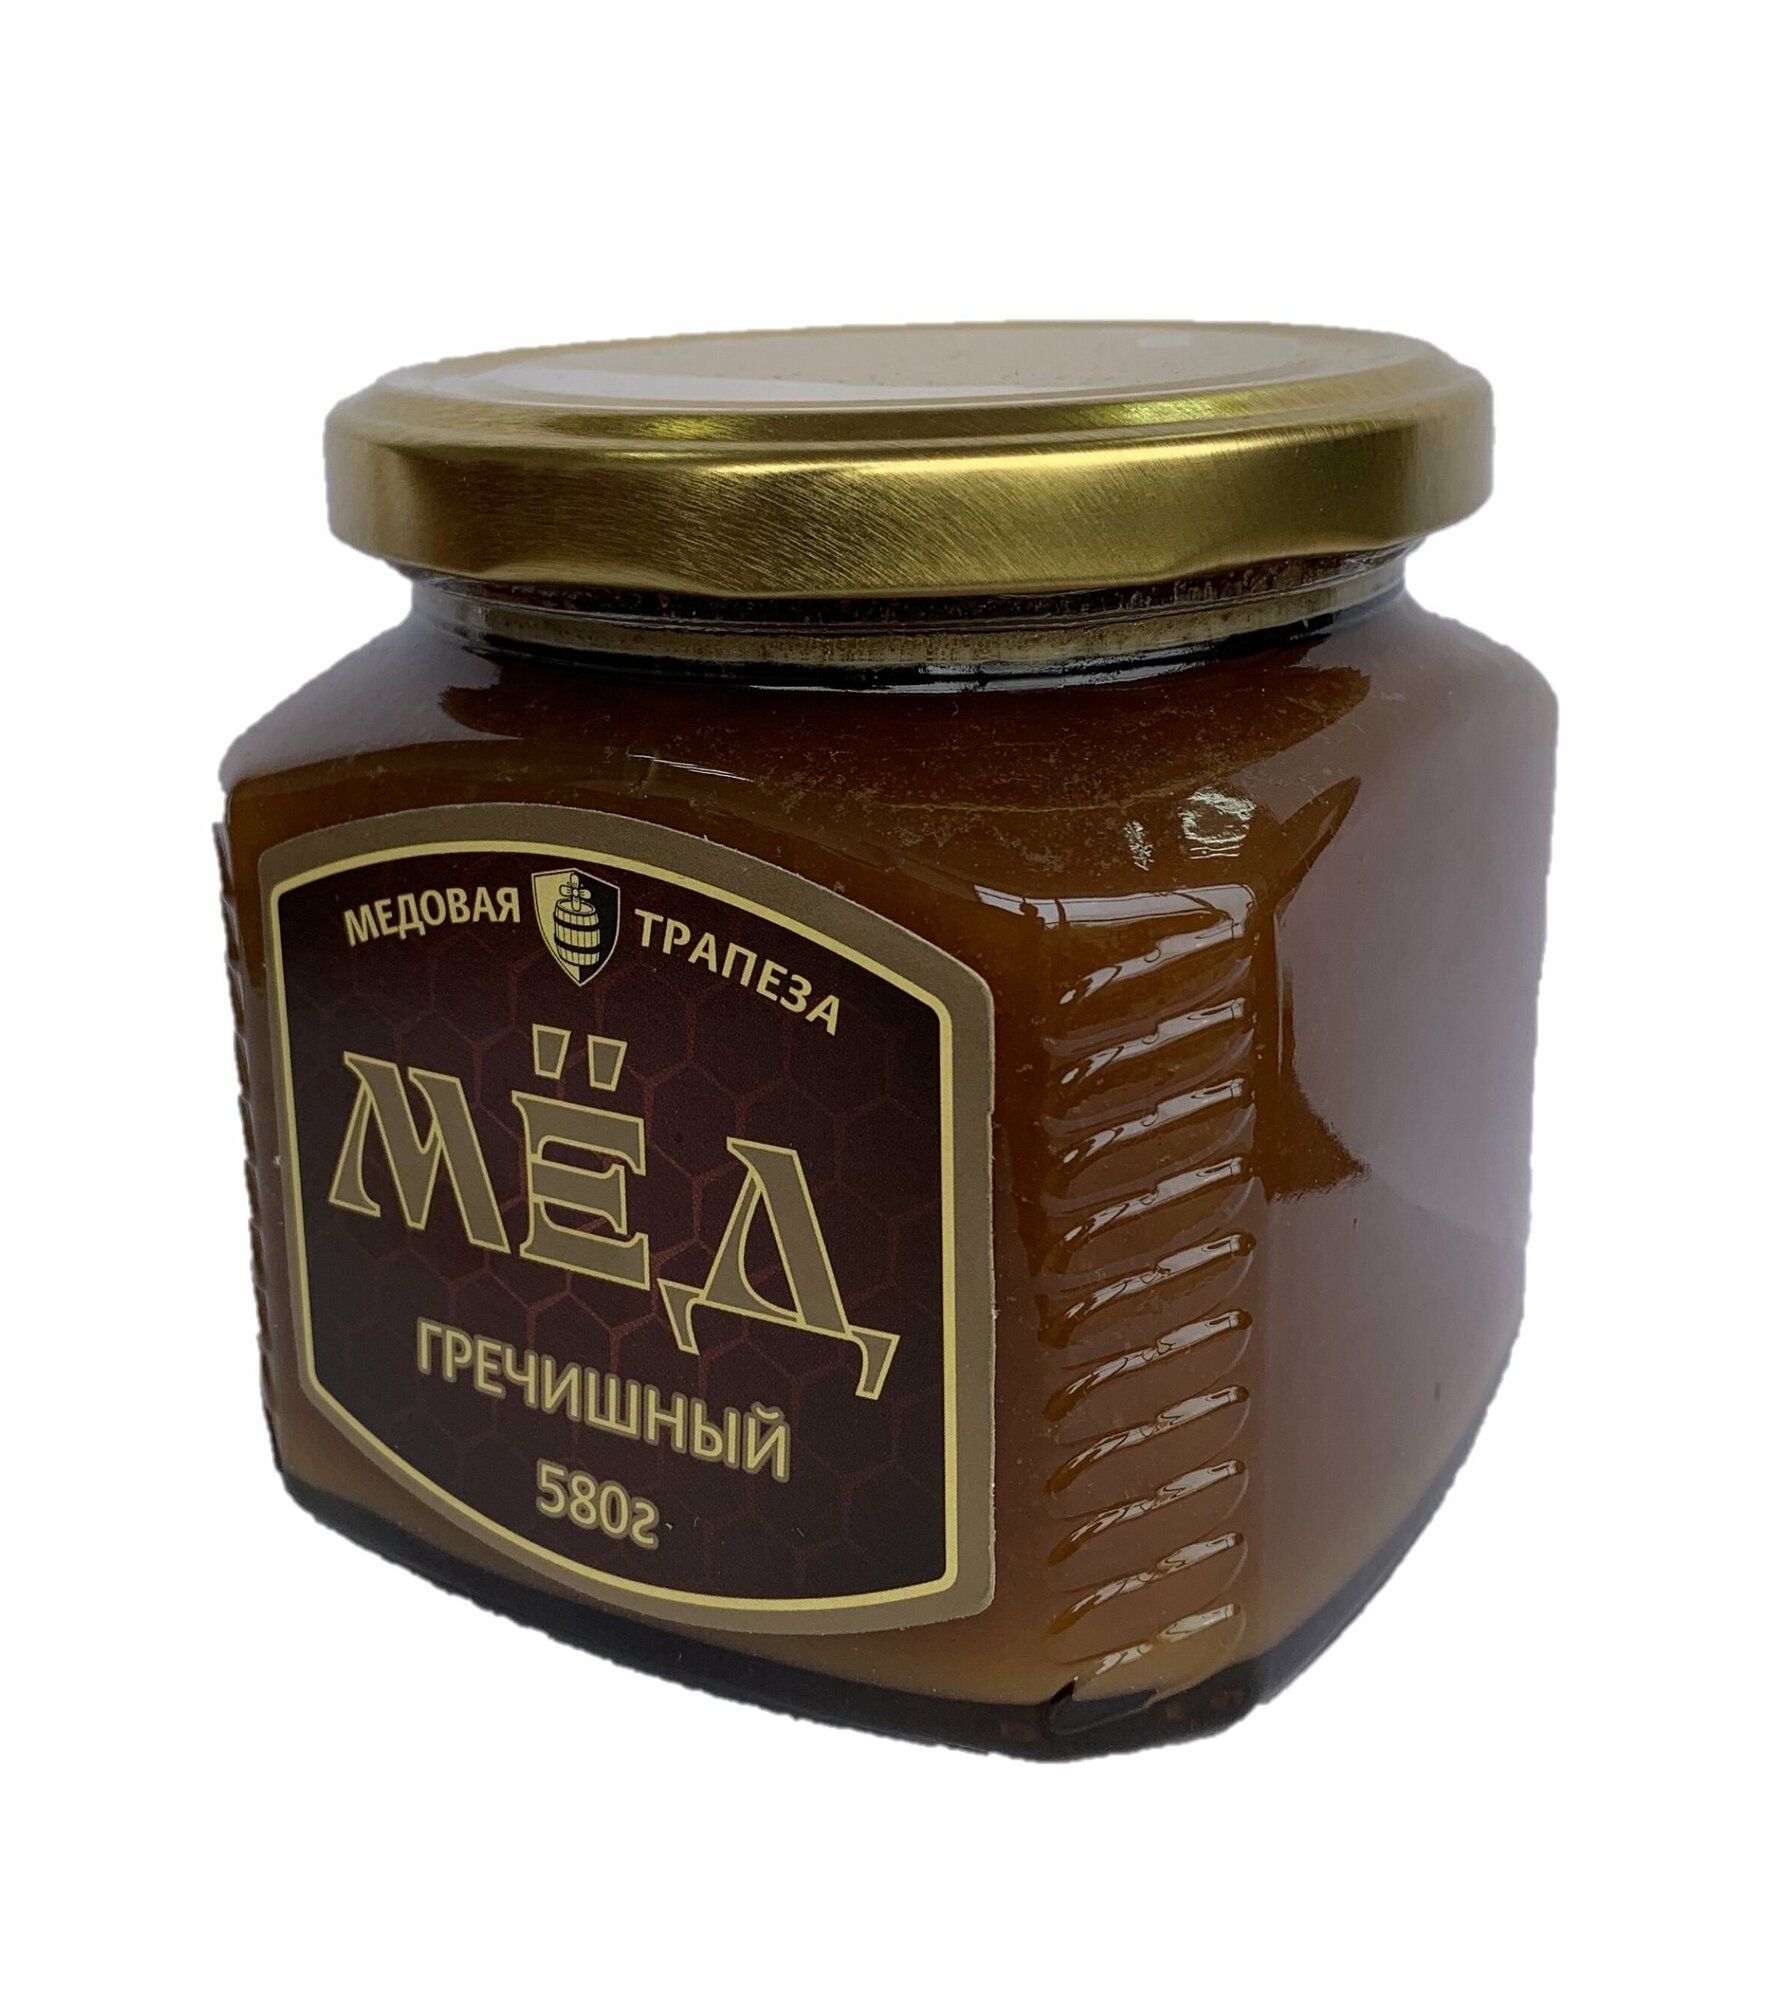 Мёд натуральный "медовая трапеза" Гречишный, 580 г